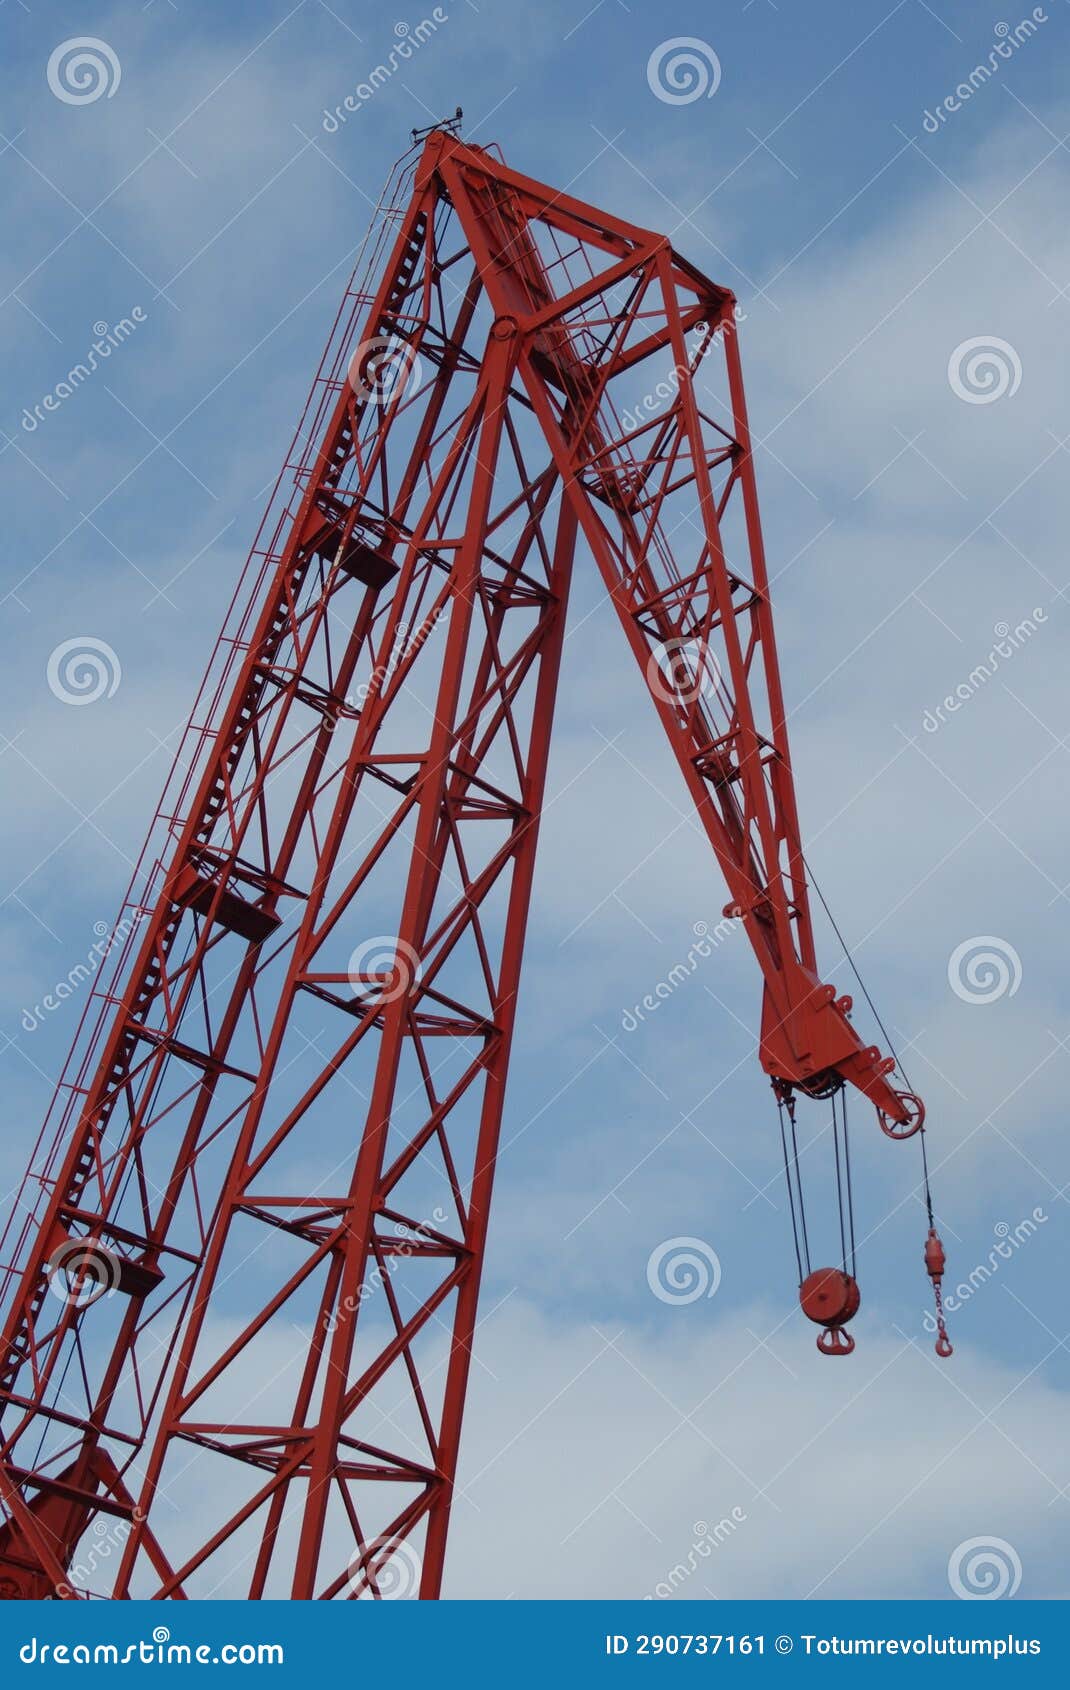 red crane closeup with blue sky background